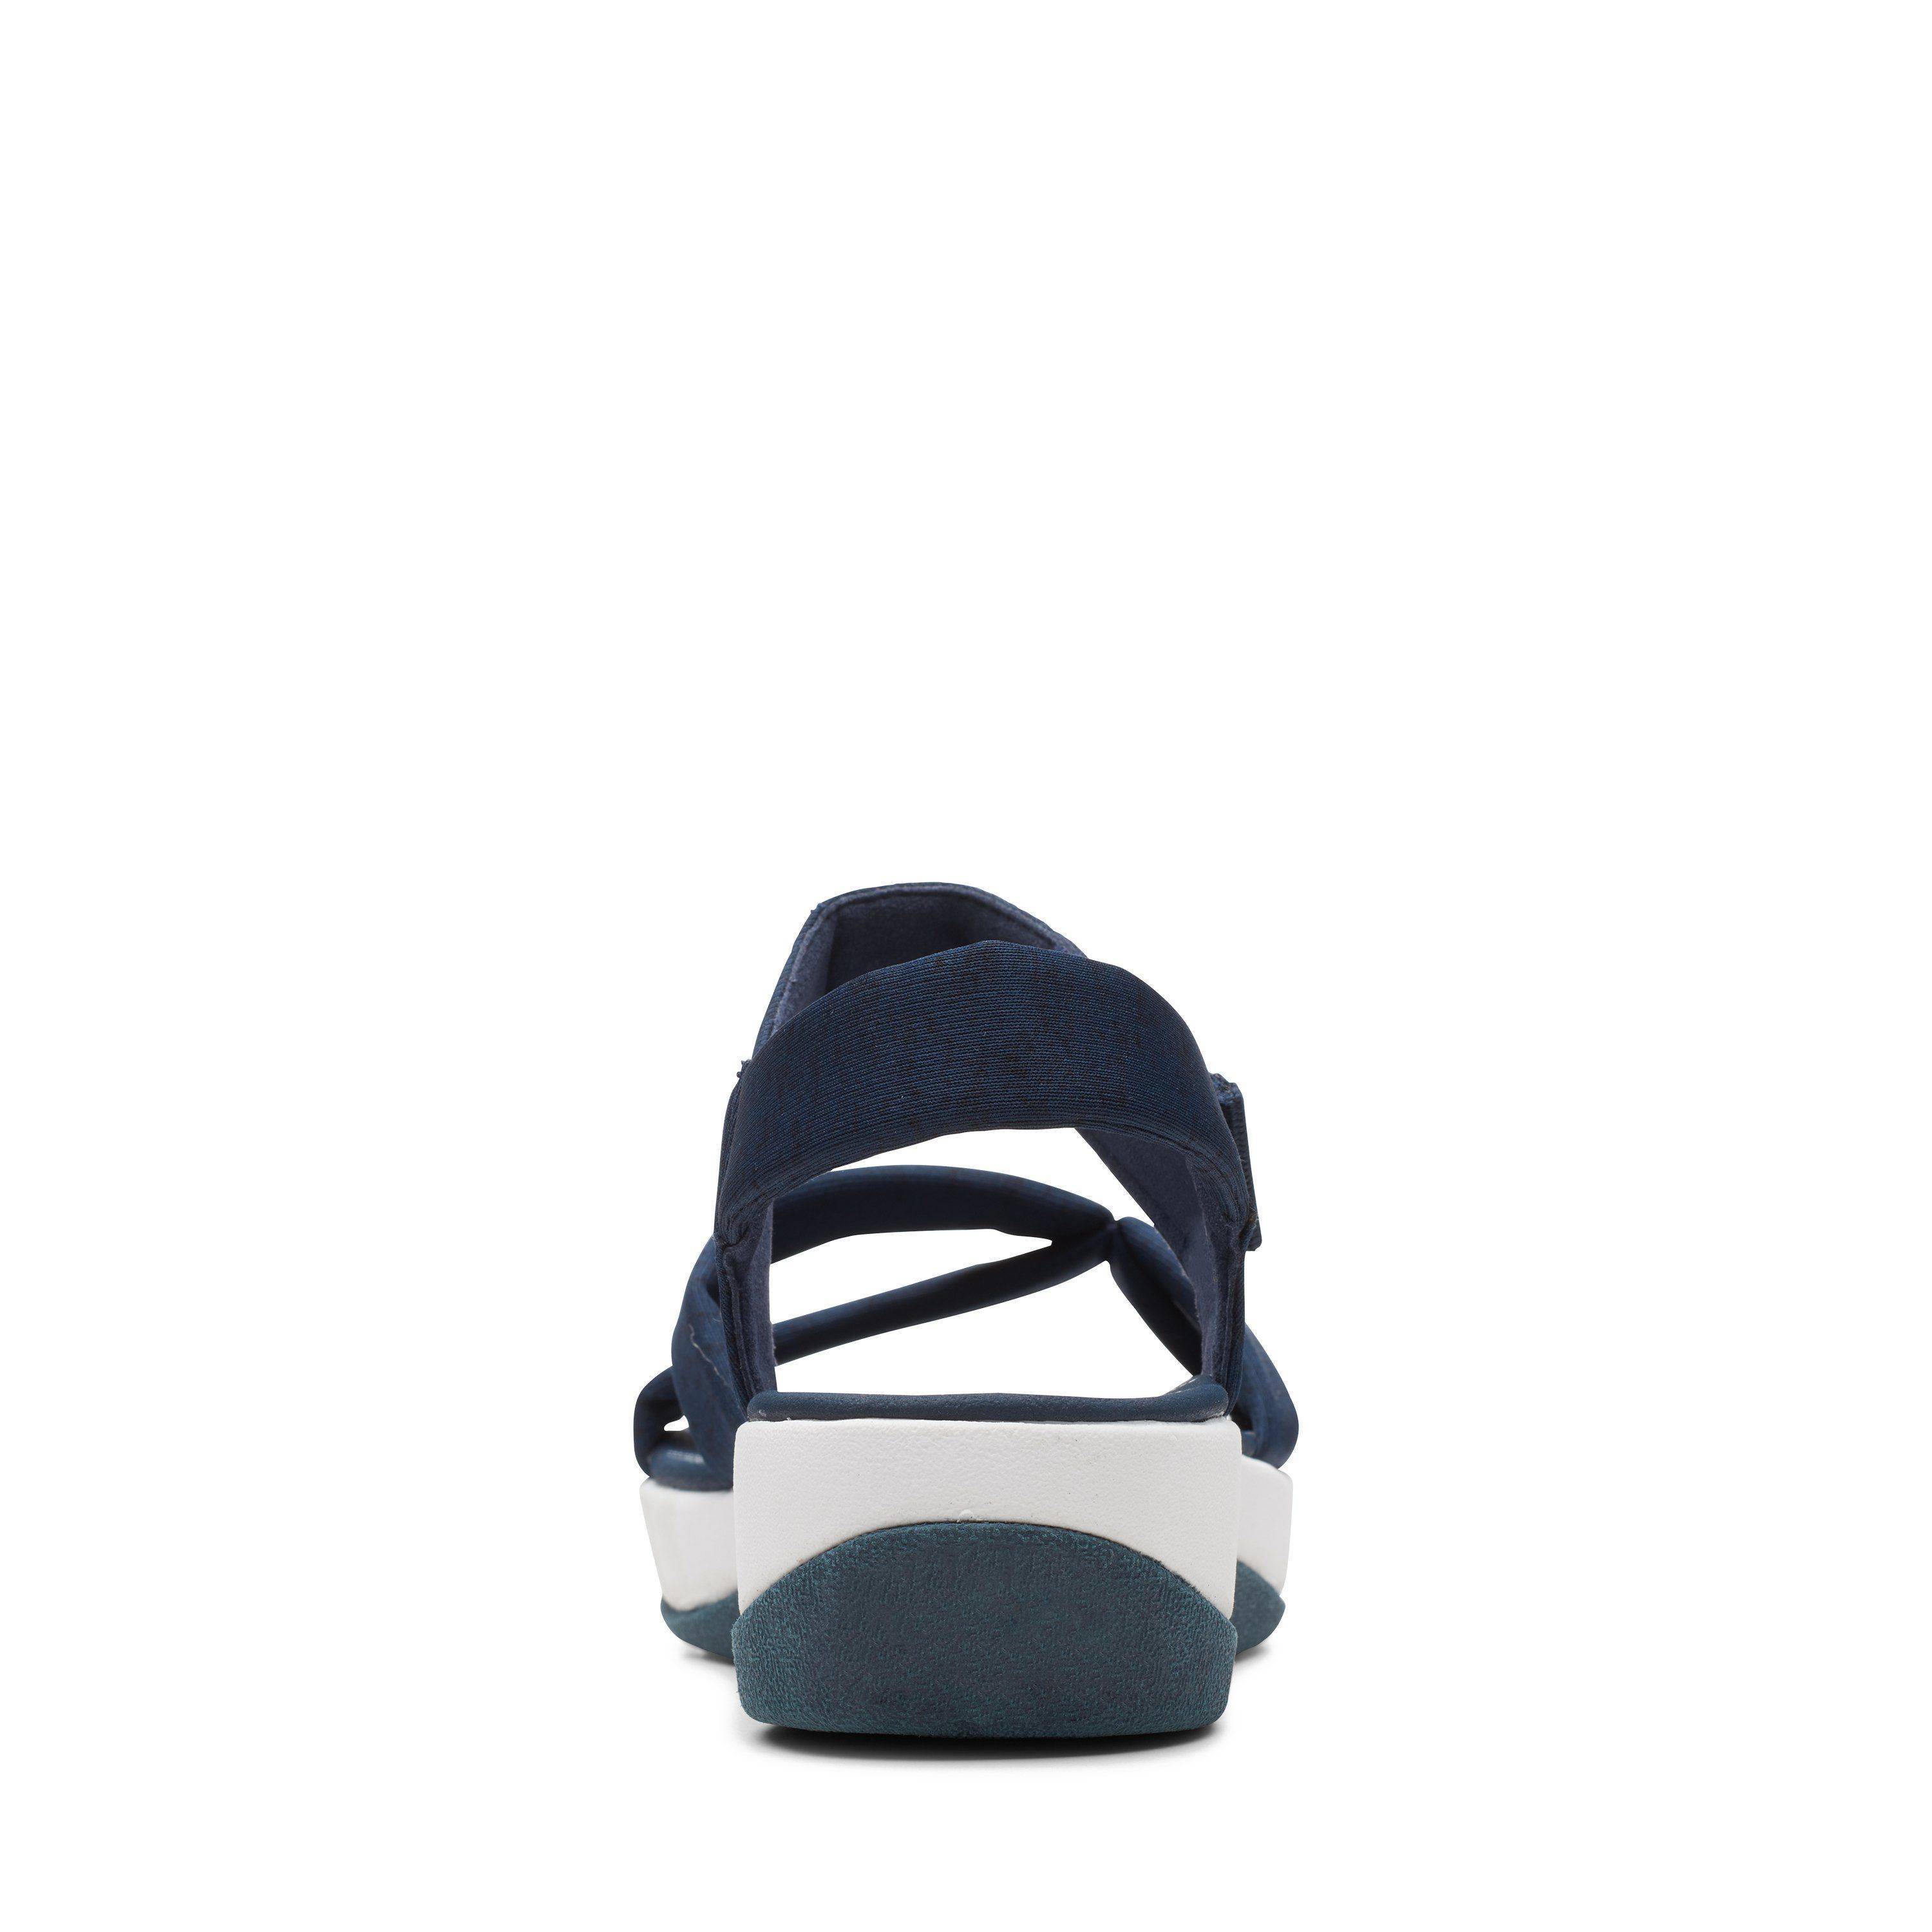 Женские сандалии Clarks, синие, цвет синий, размер 41.5 - фото 6